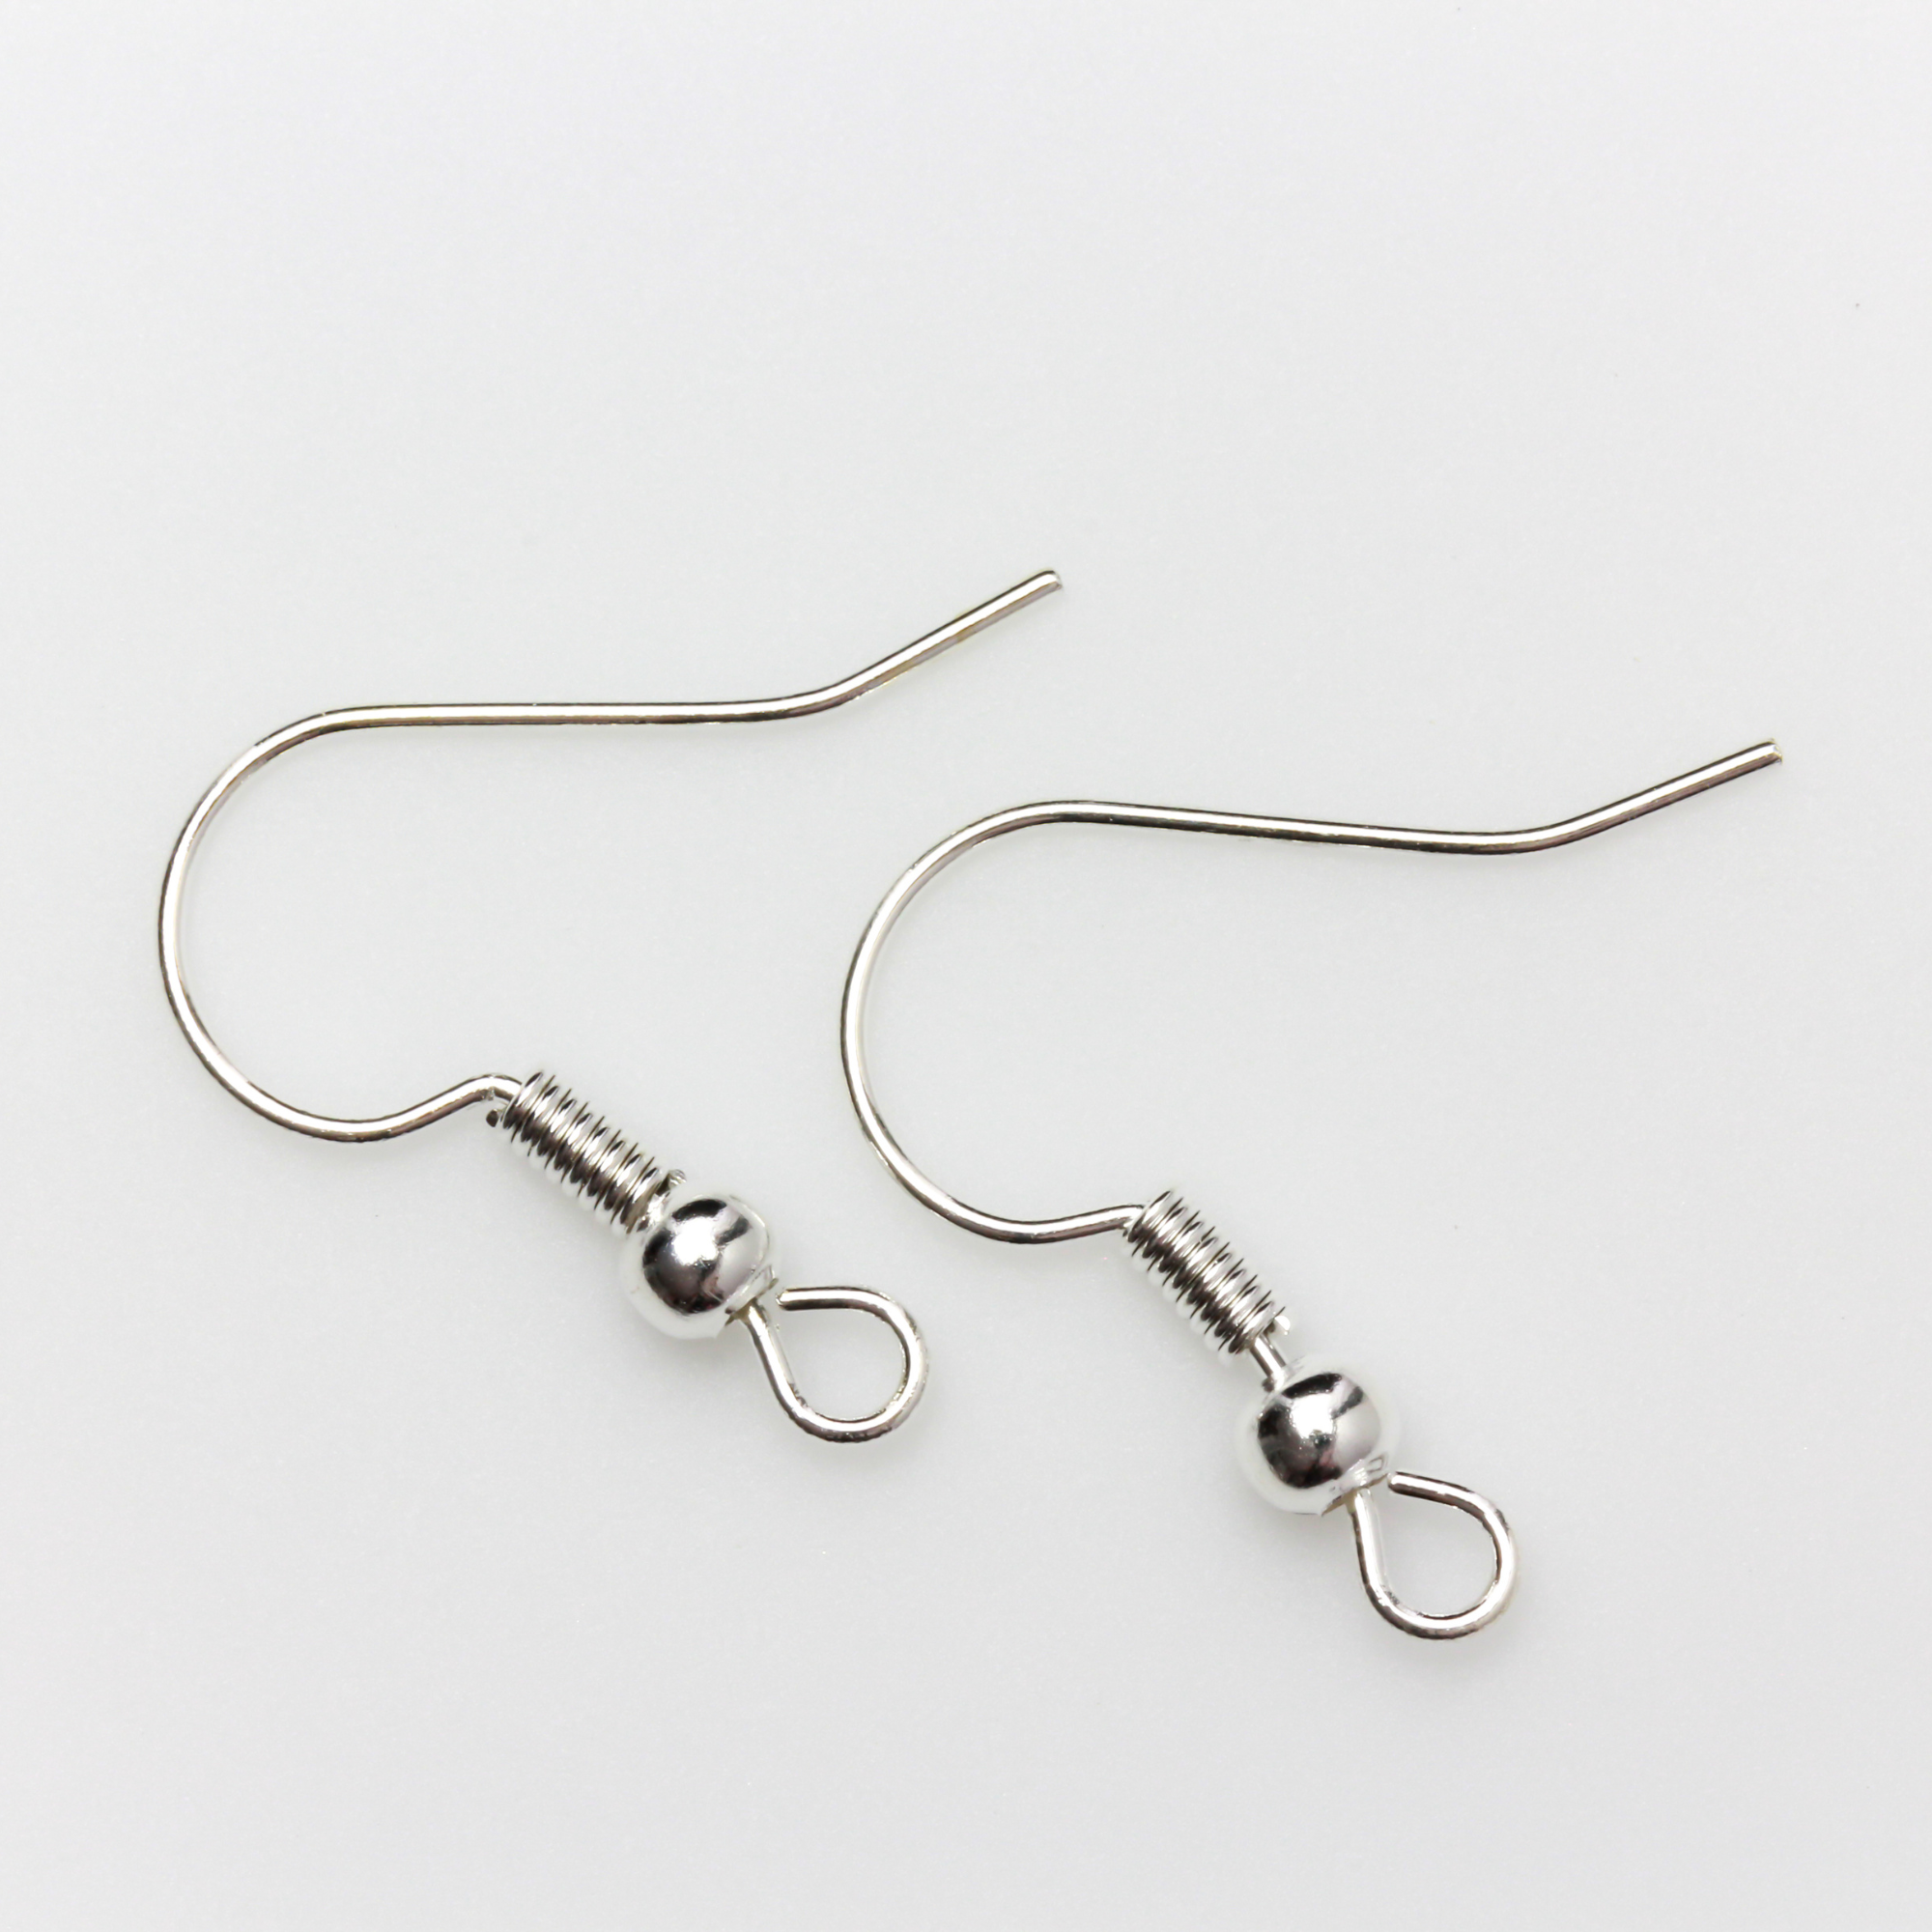 Bronze Earring Hooks with Horizontal Loop - 23 gauge, 30 pieces